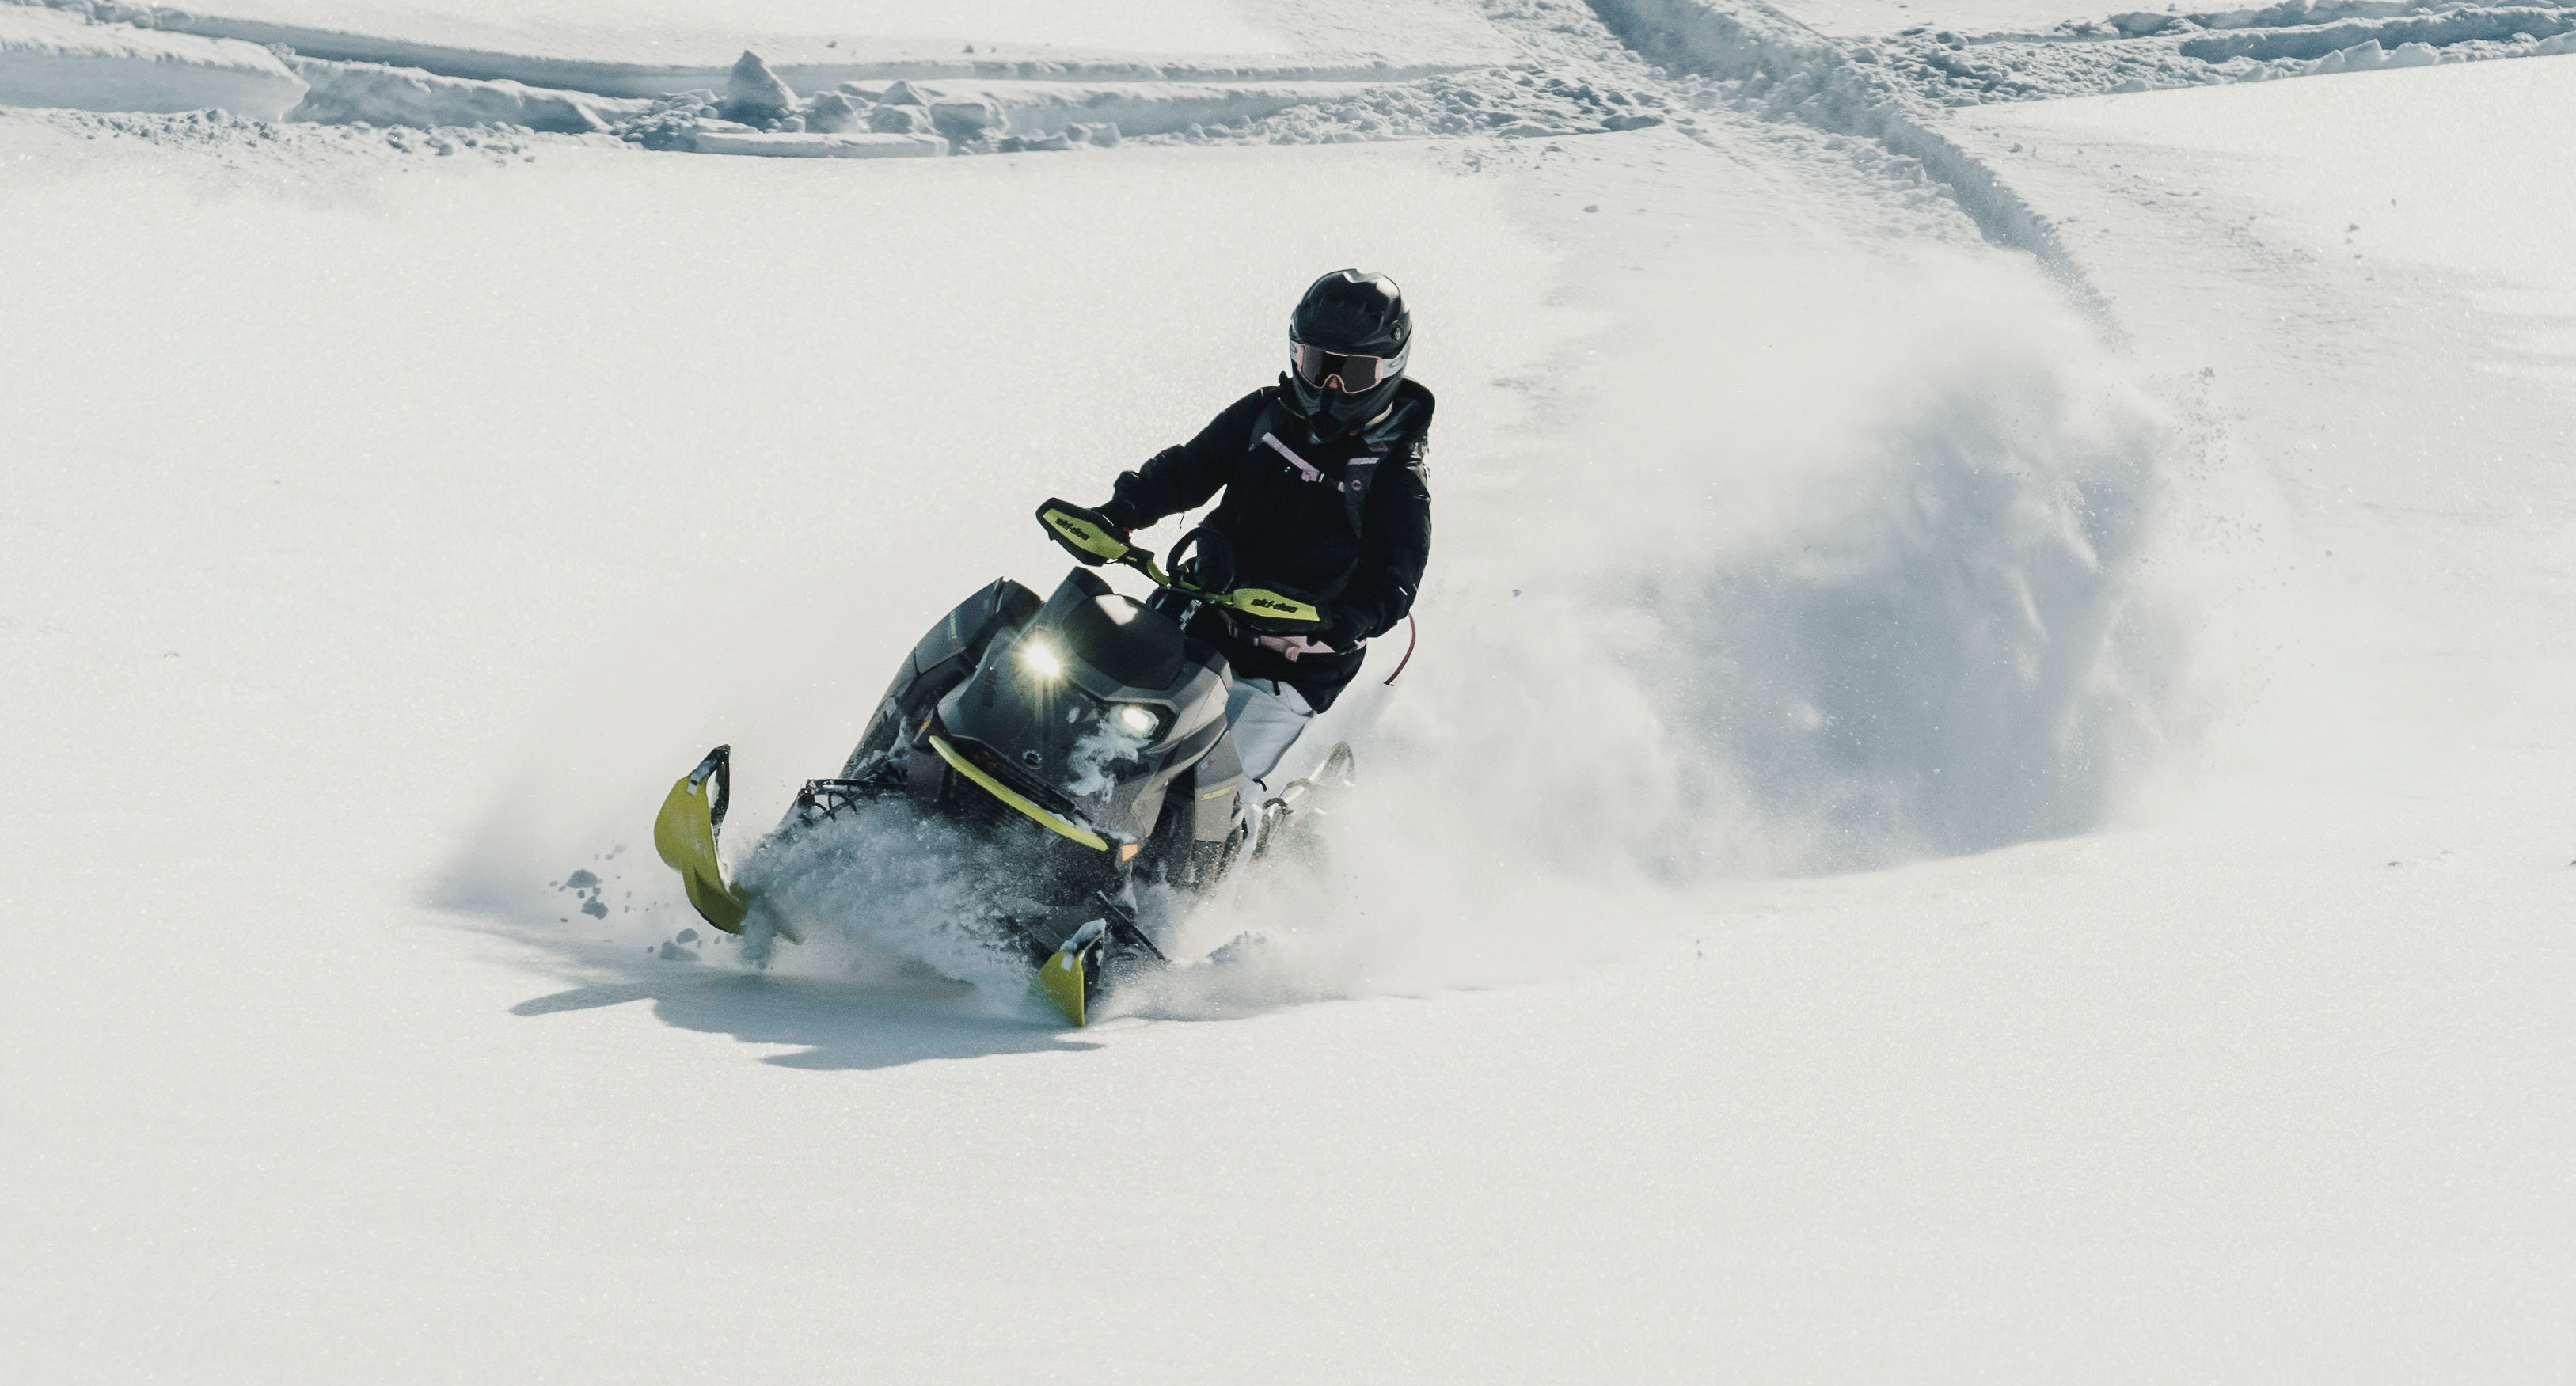 Jamie Anderson riding a Ski-Doo snowmobile in deep snow